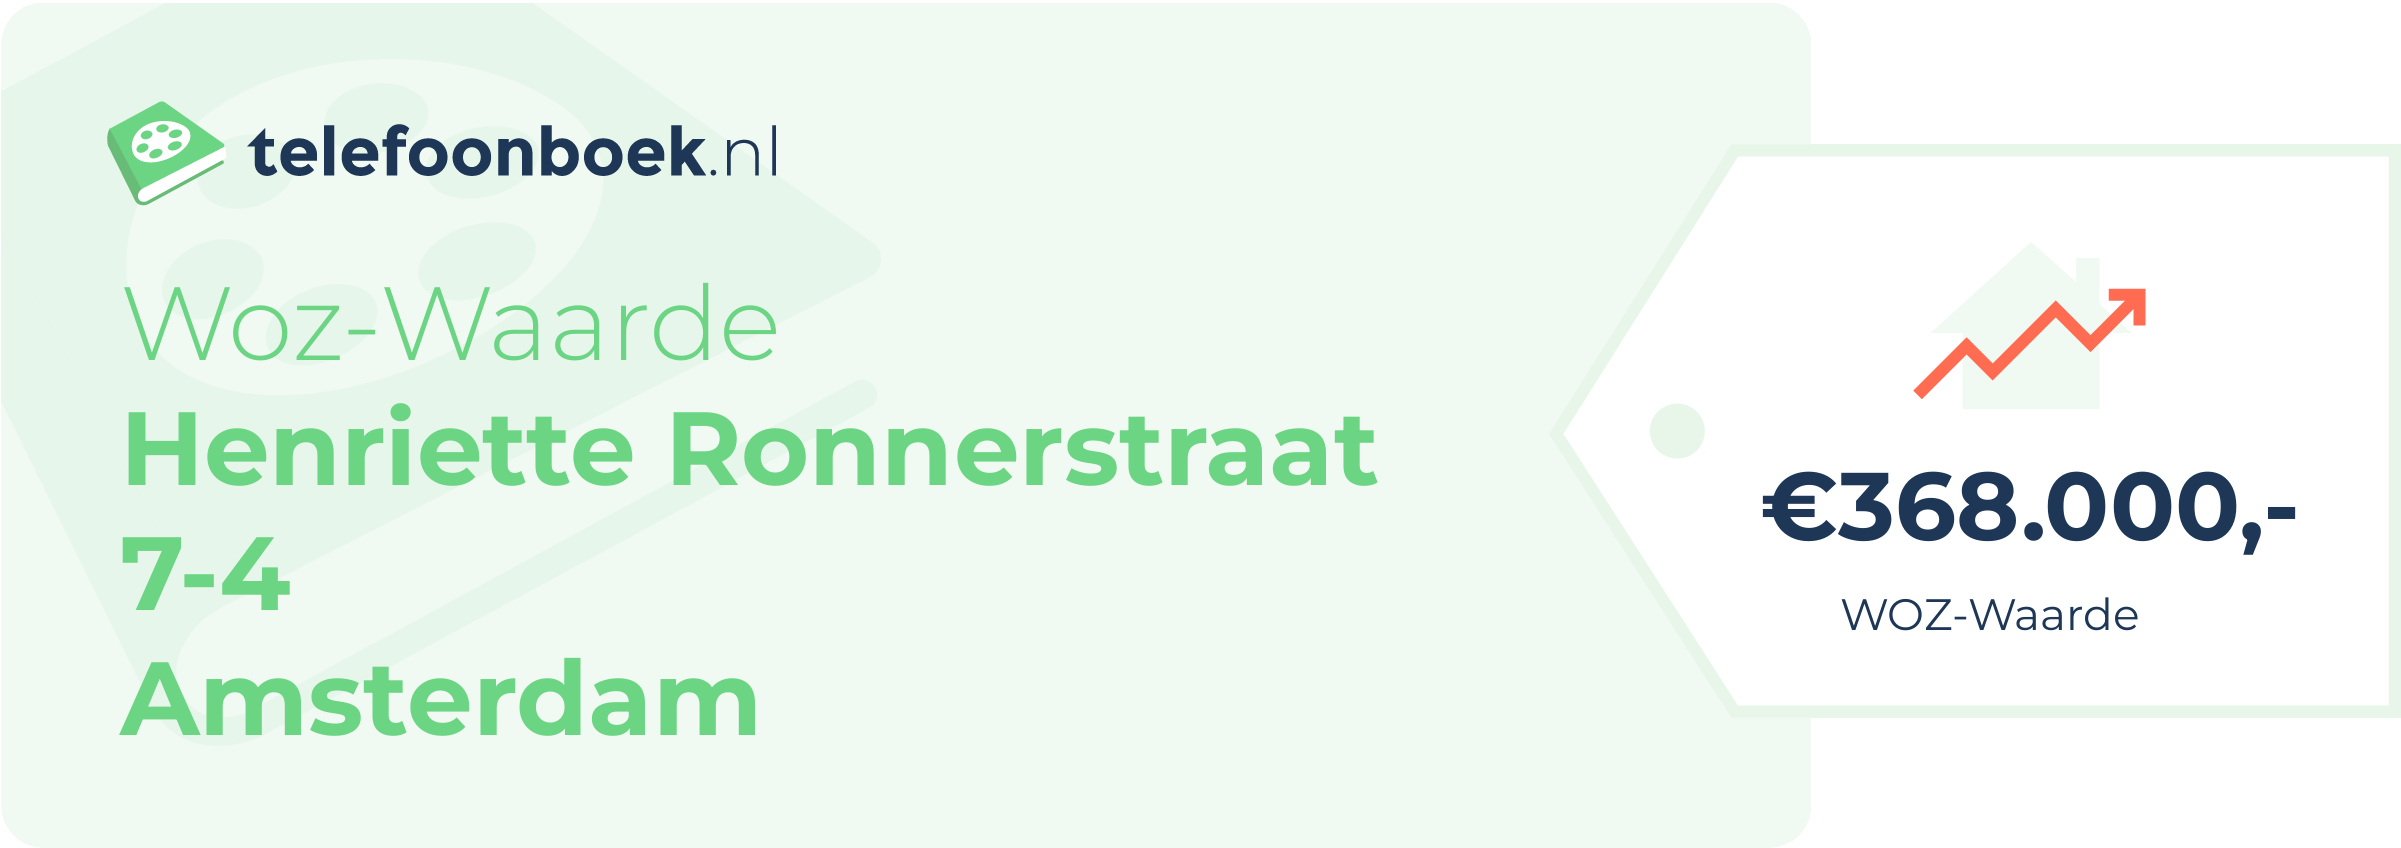 WOZ-waarde Henriette Ronnerstraat 7-4 Amsterdam